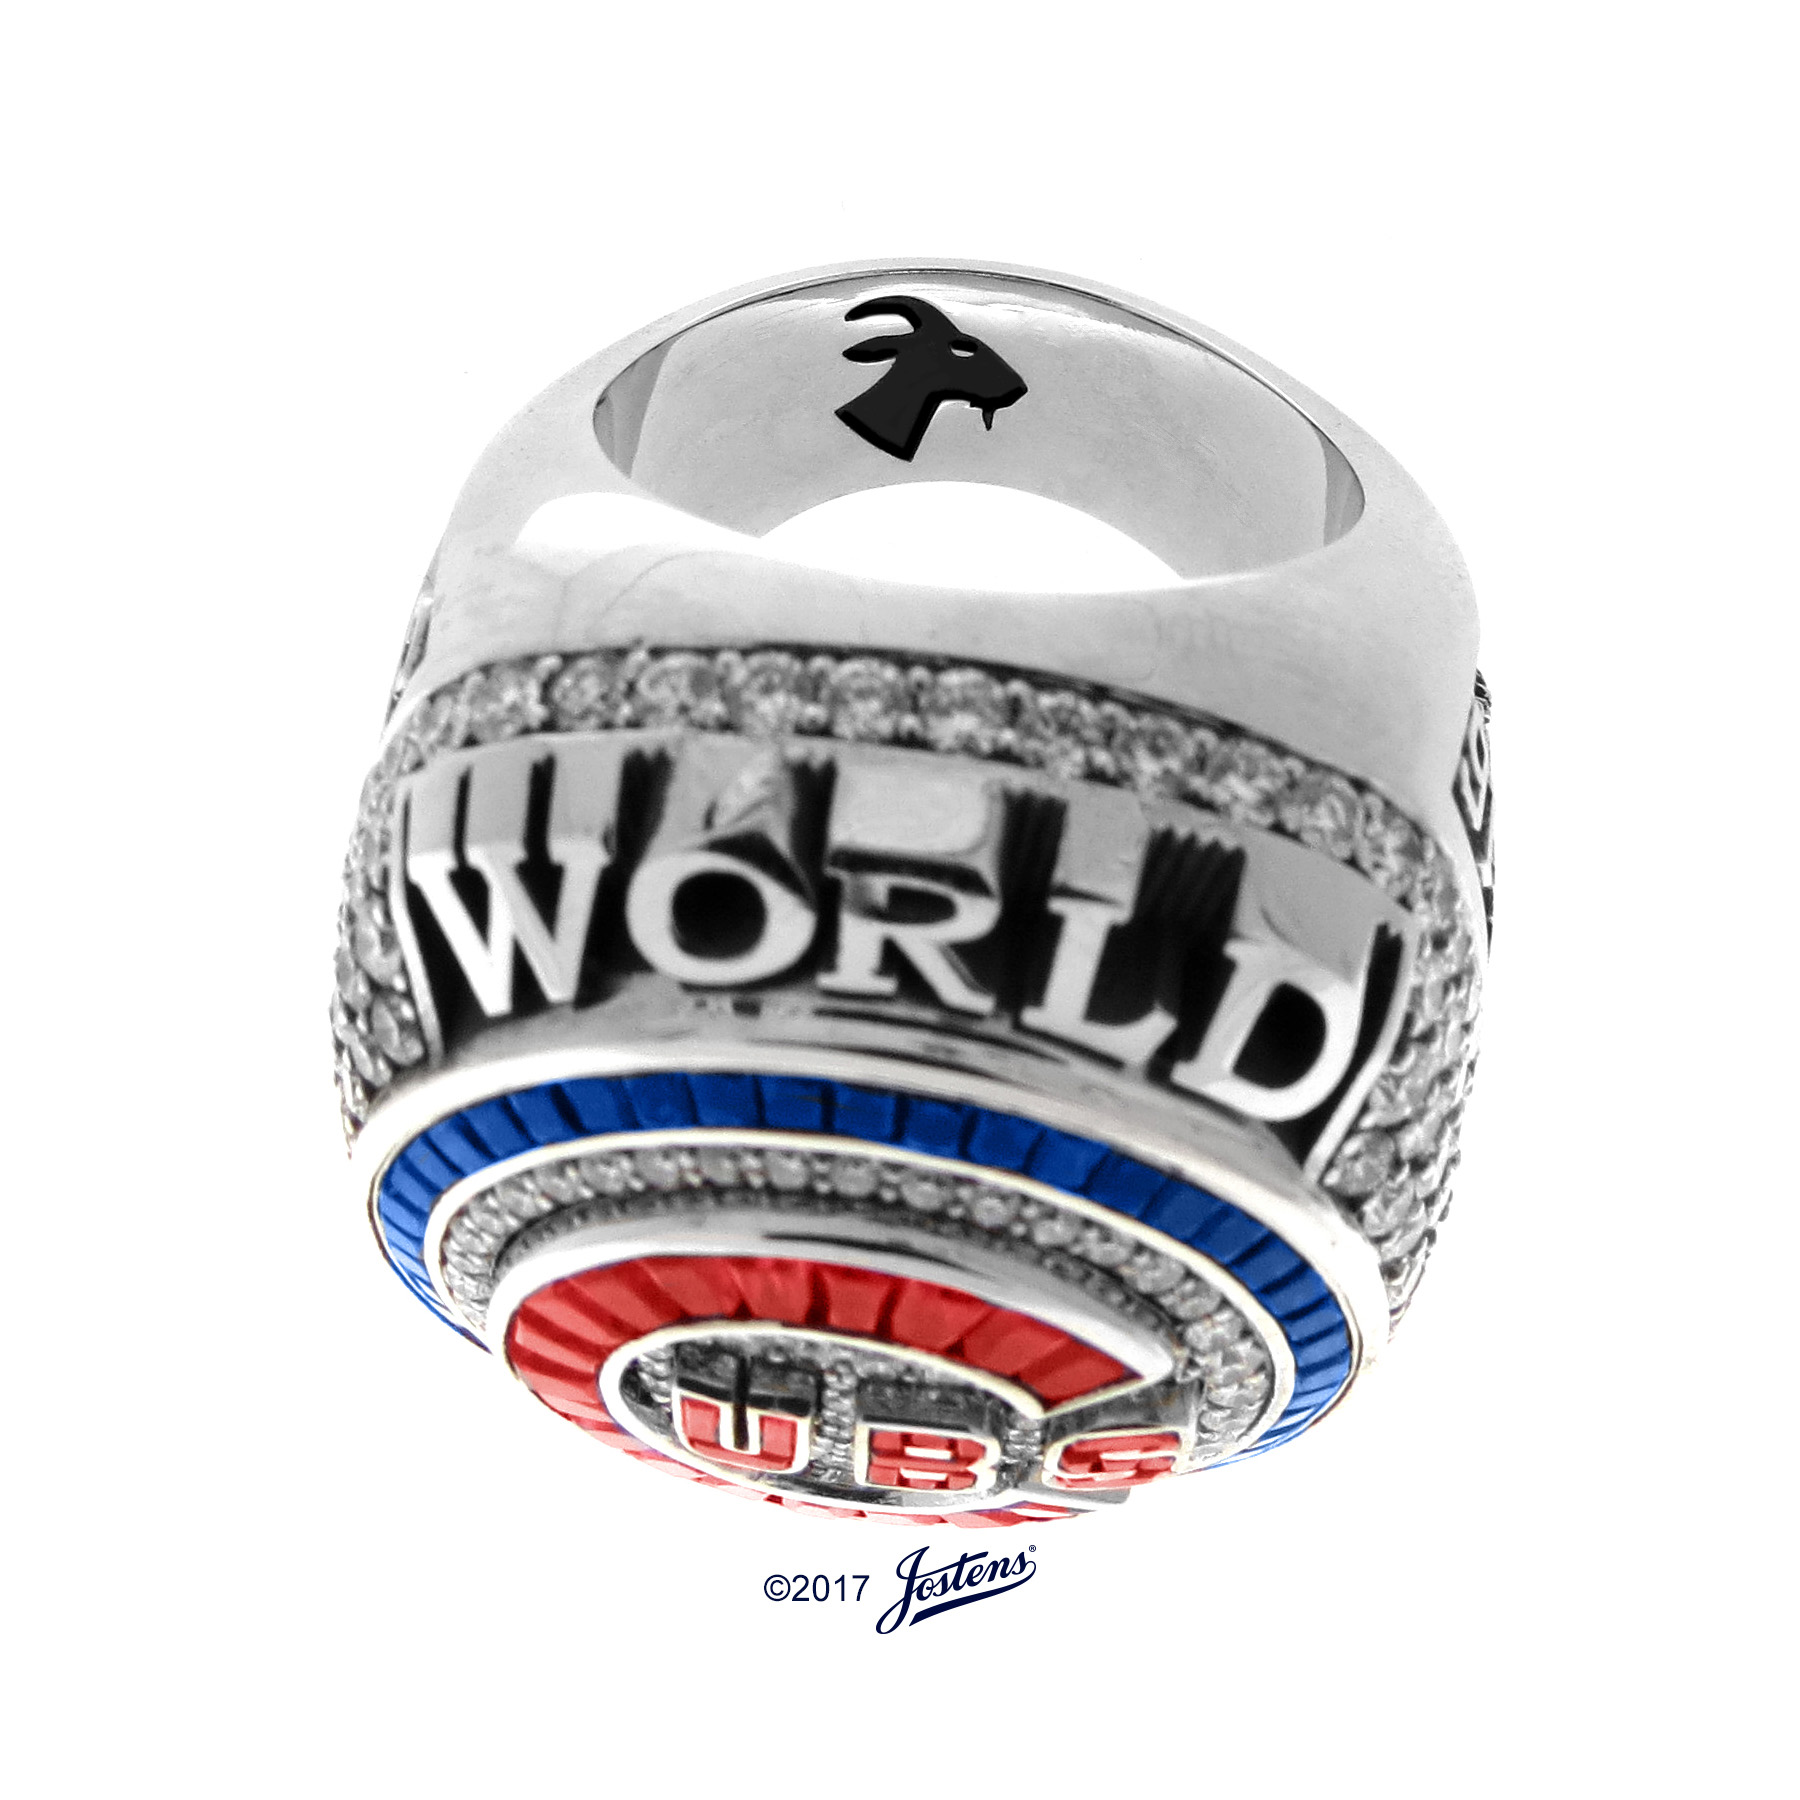 Nationals' World Series rings feature 170 diamonds, Baby Shark